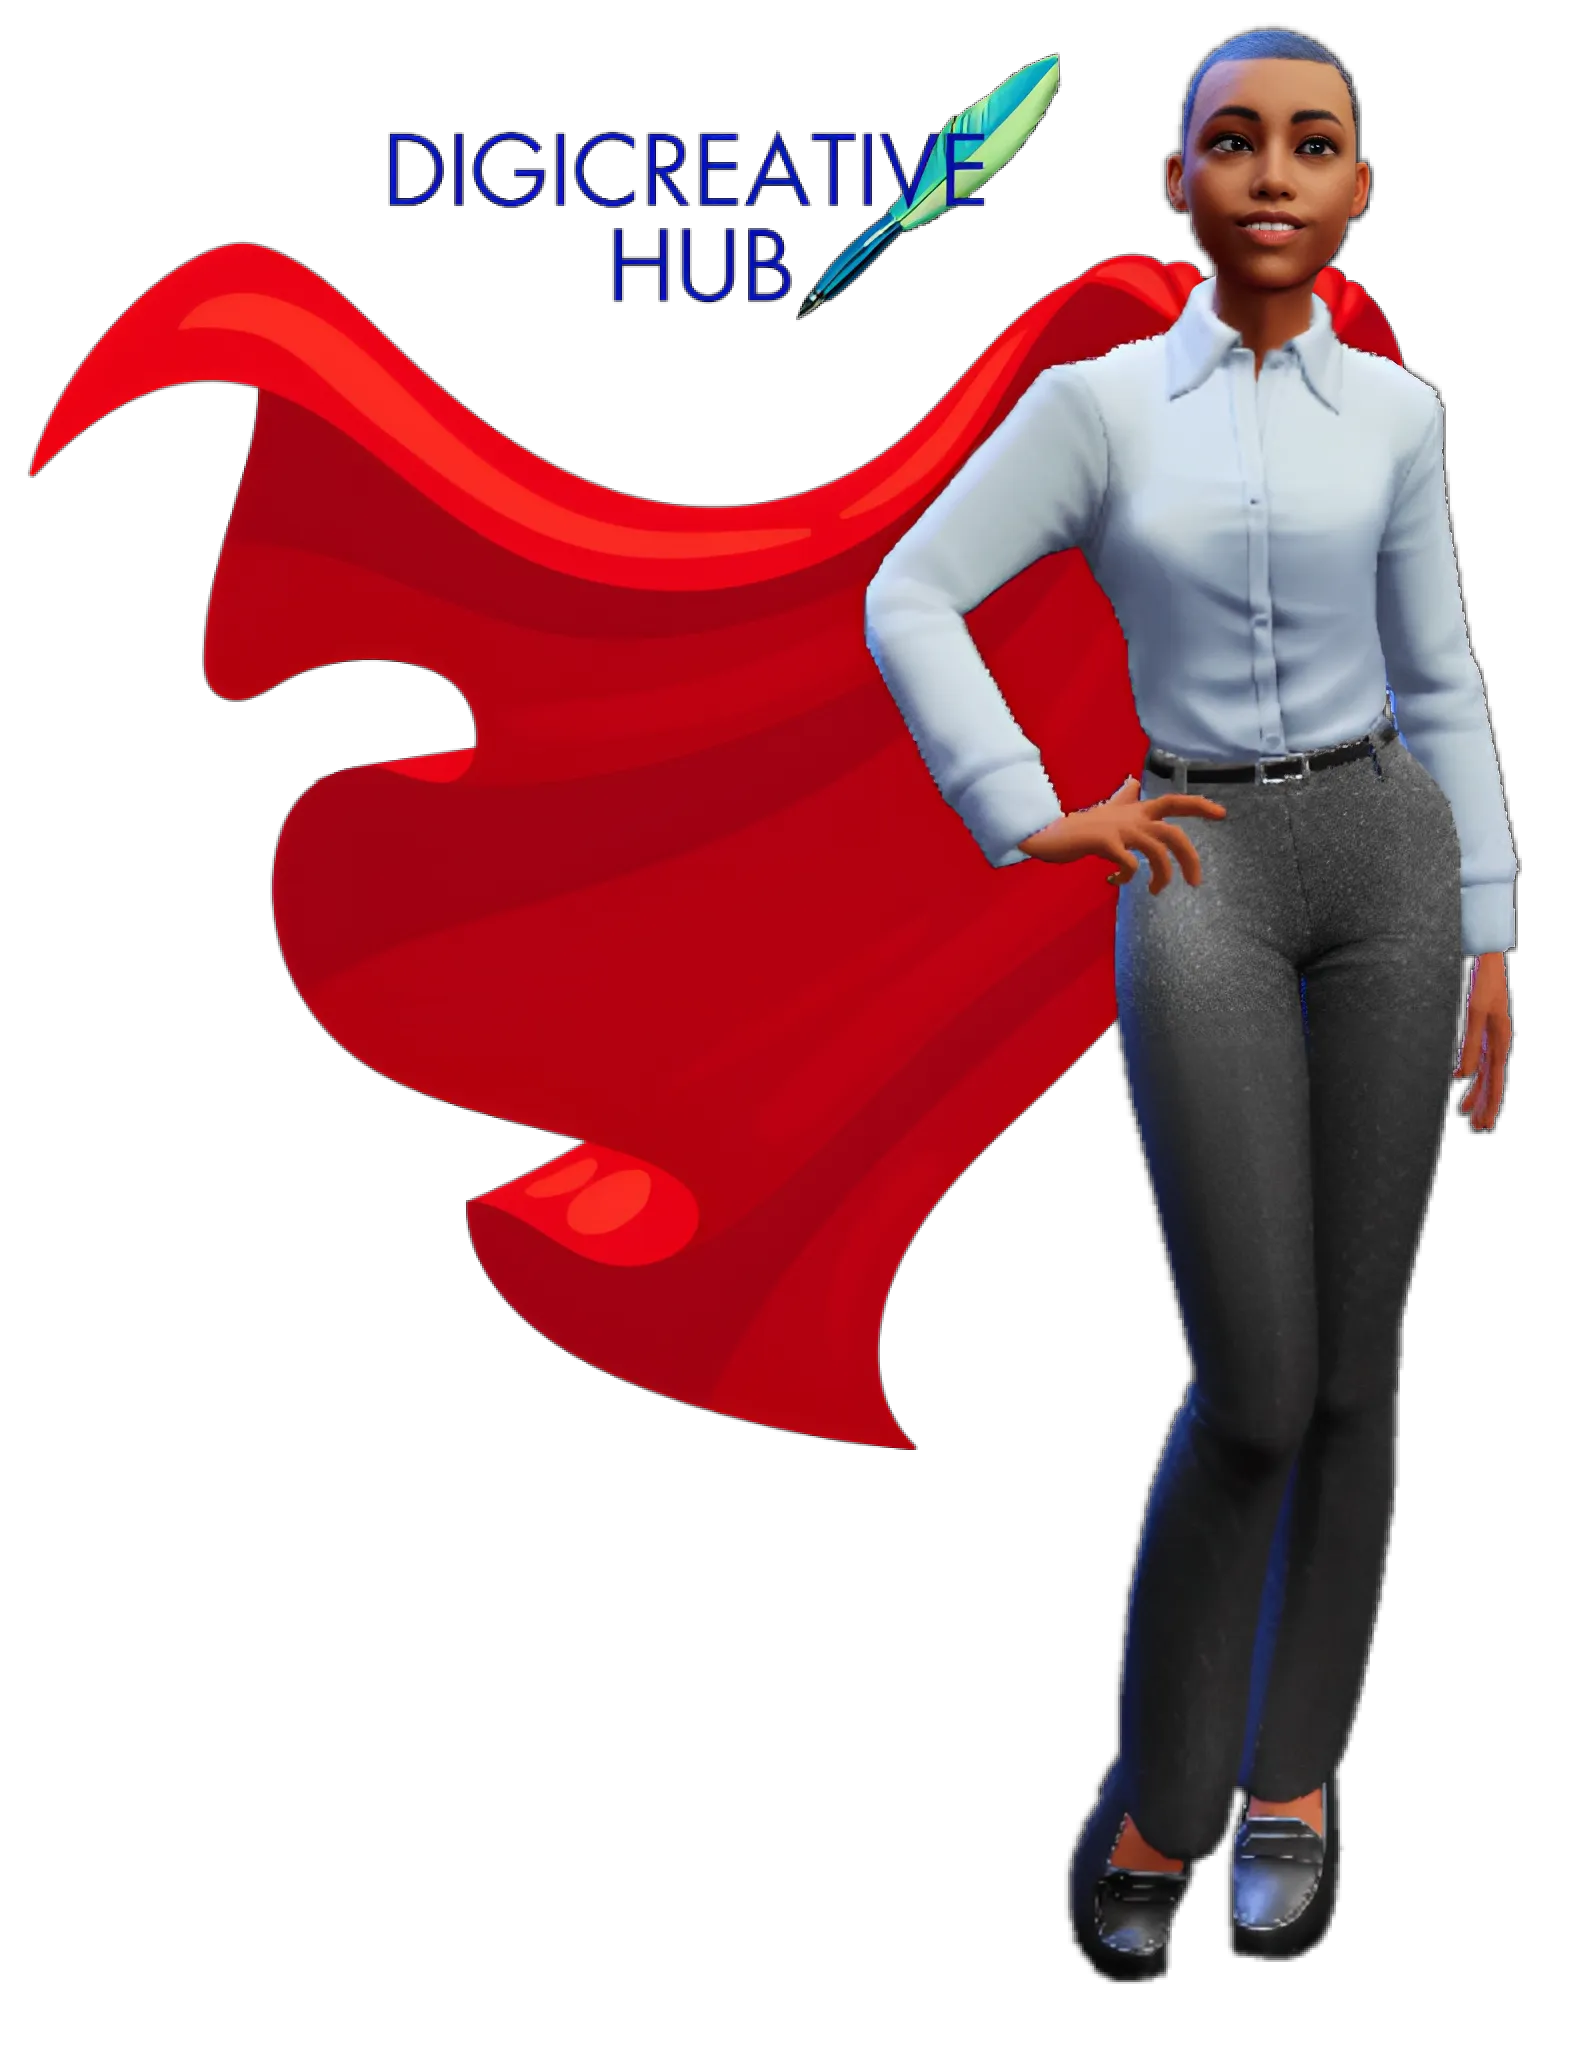 DigiCreative Hub superhero mascot